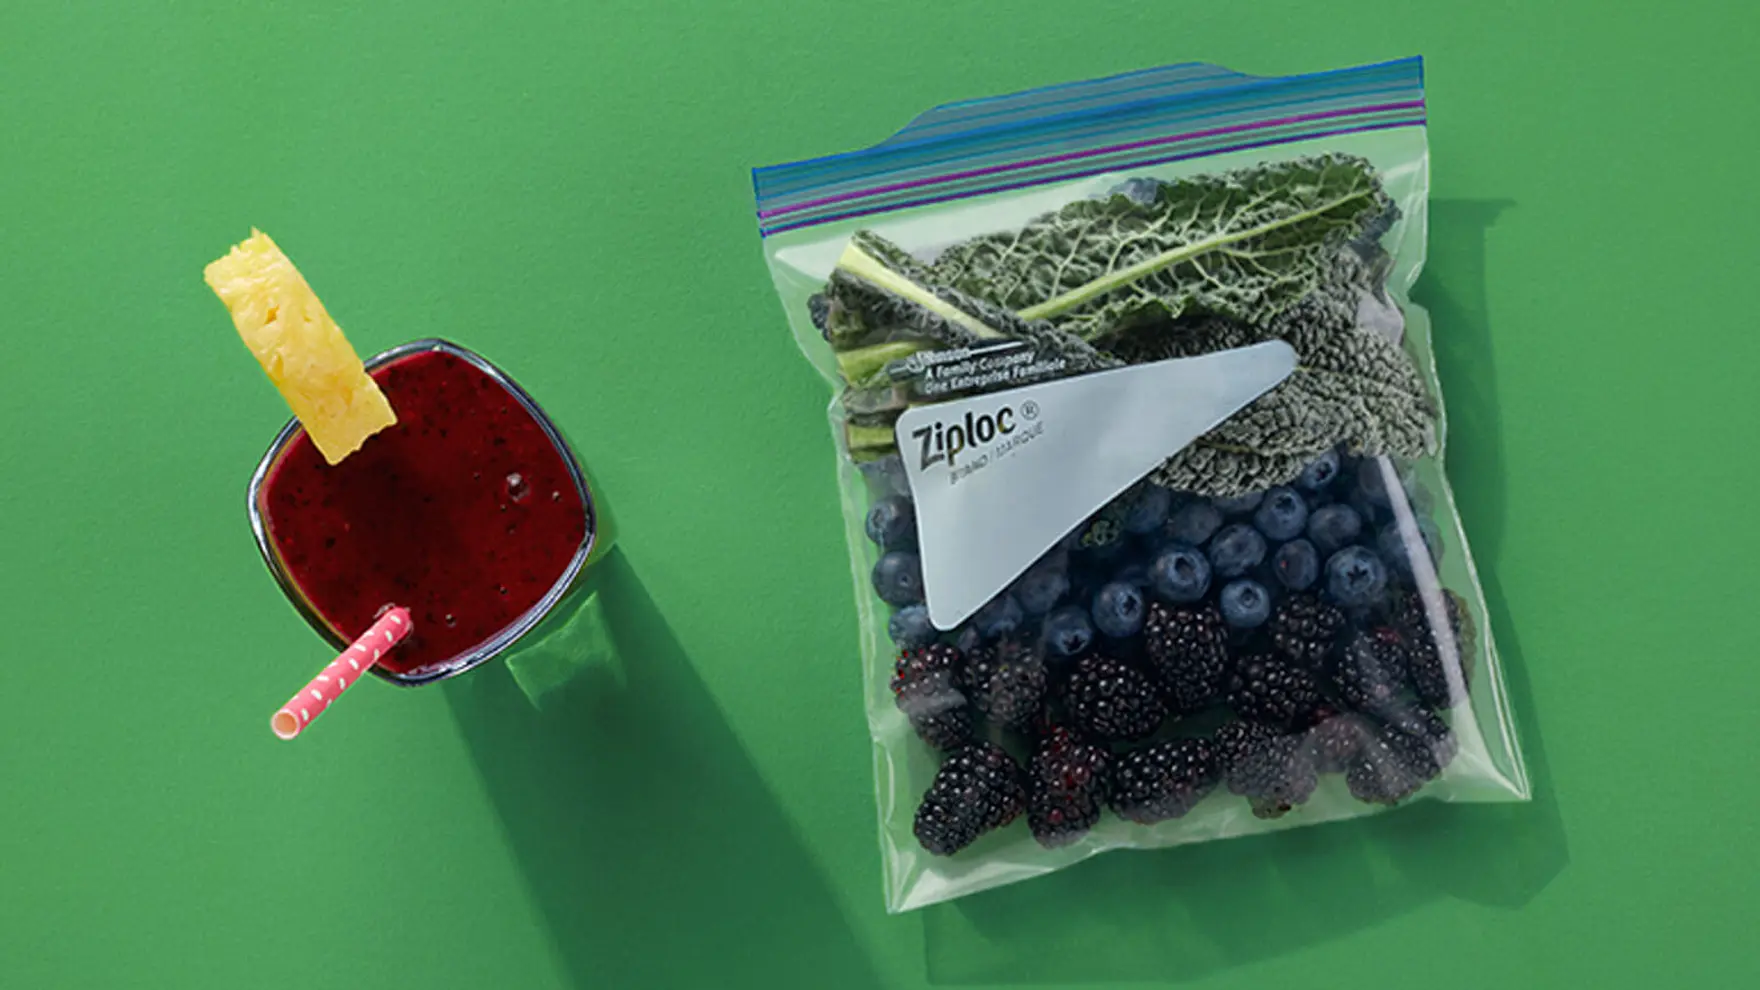 Ziploc bag filled with kale, blueberries, and blackberries